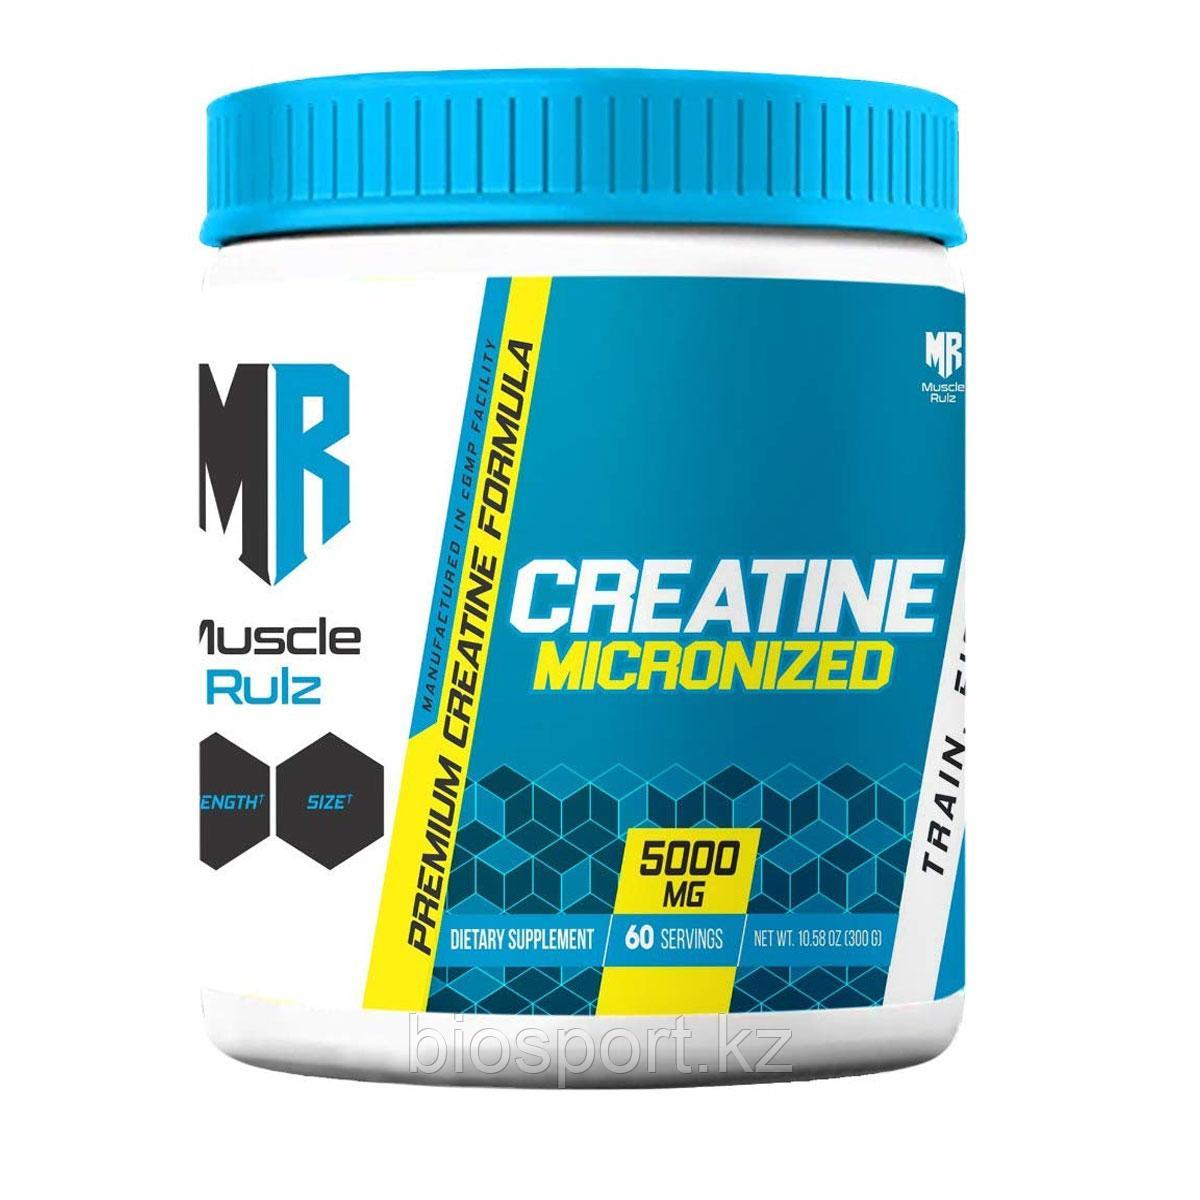 MuscleRulz Creatine, 300 гр